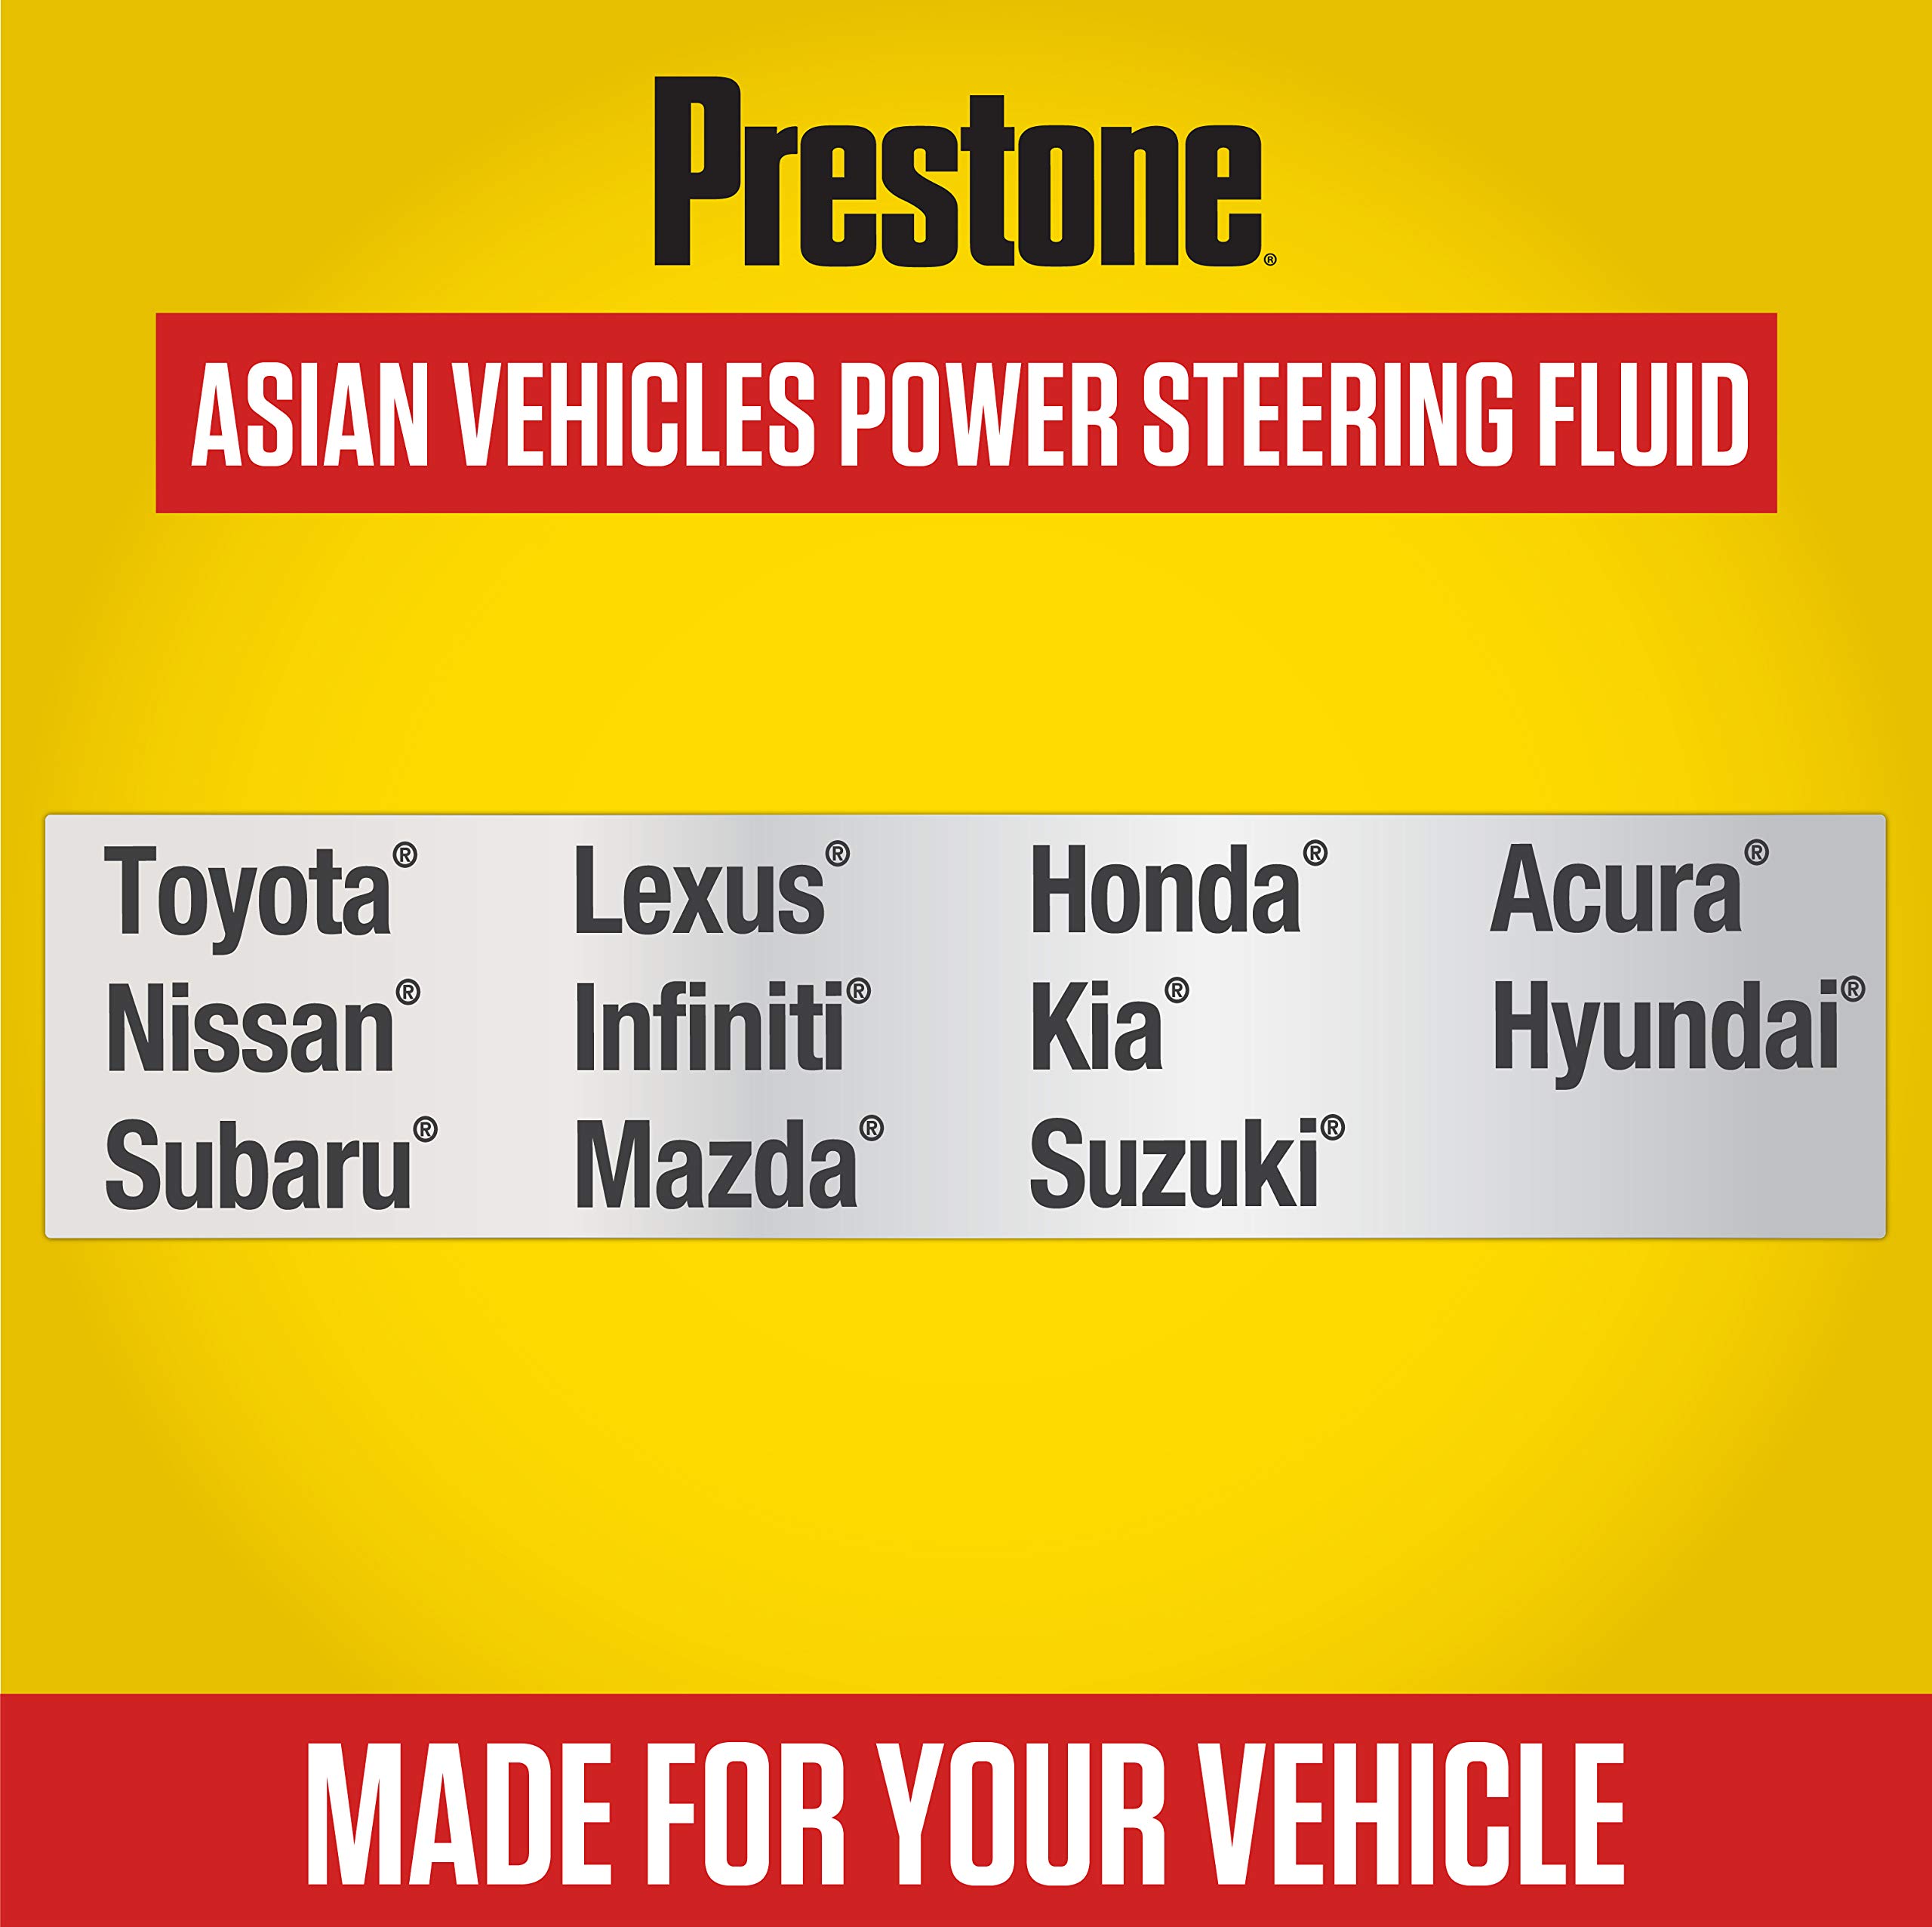 Prestone AS269 Power Steering Fluid for Asian Vehicles - 12 oz.